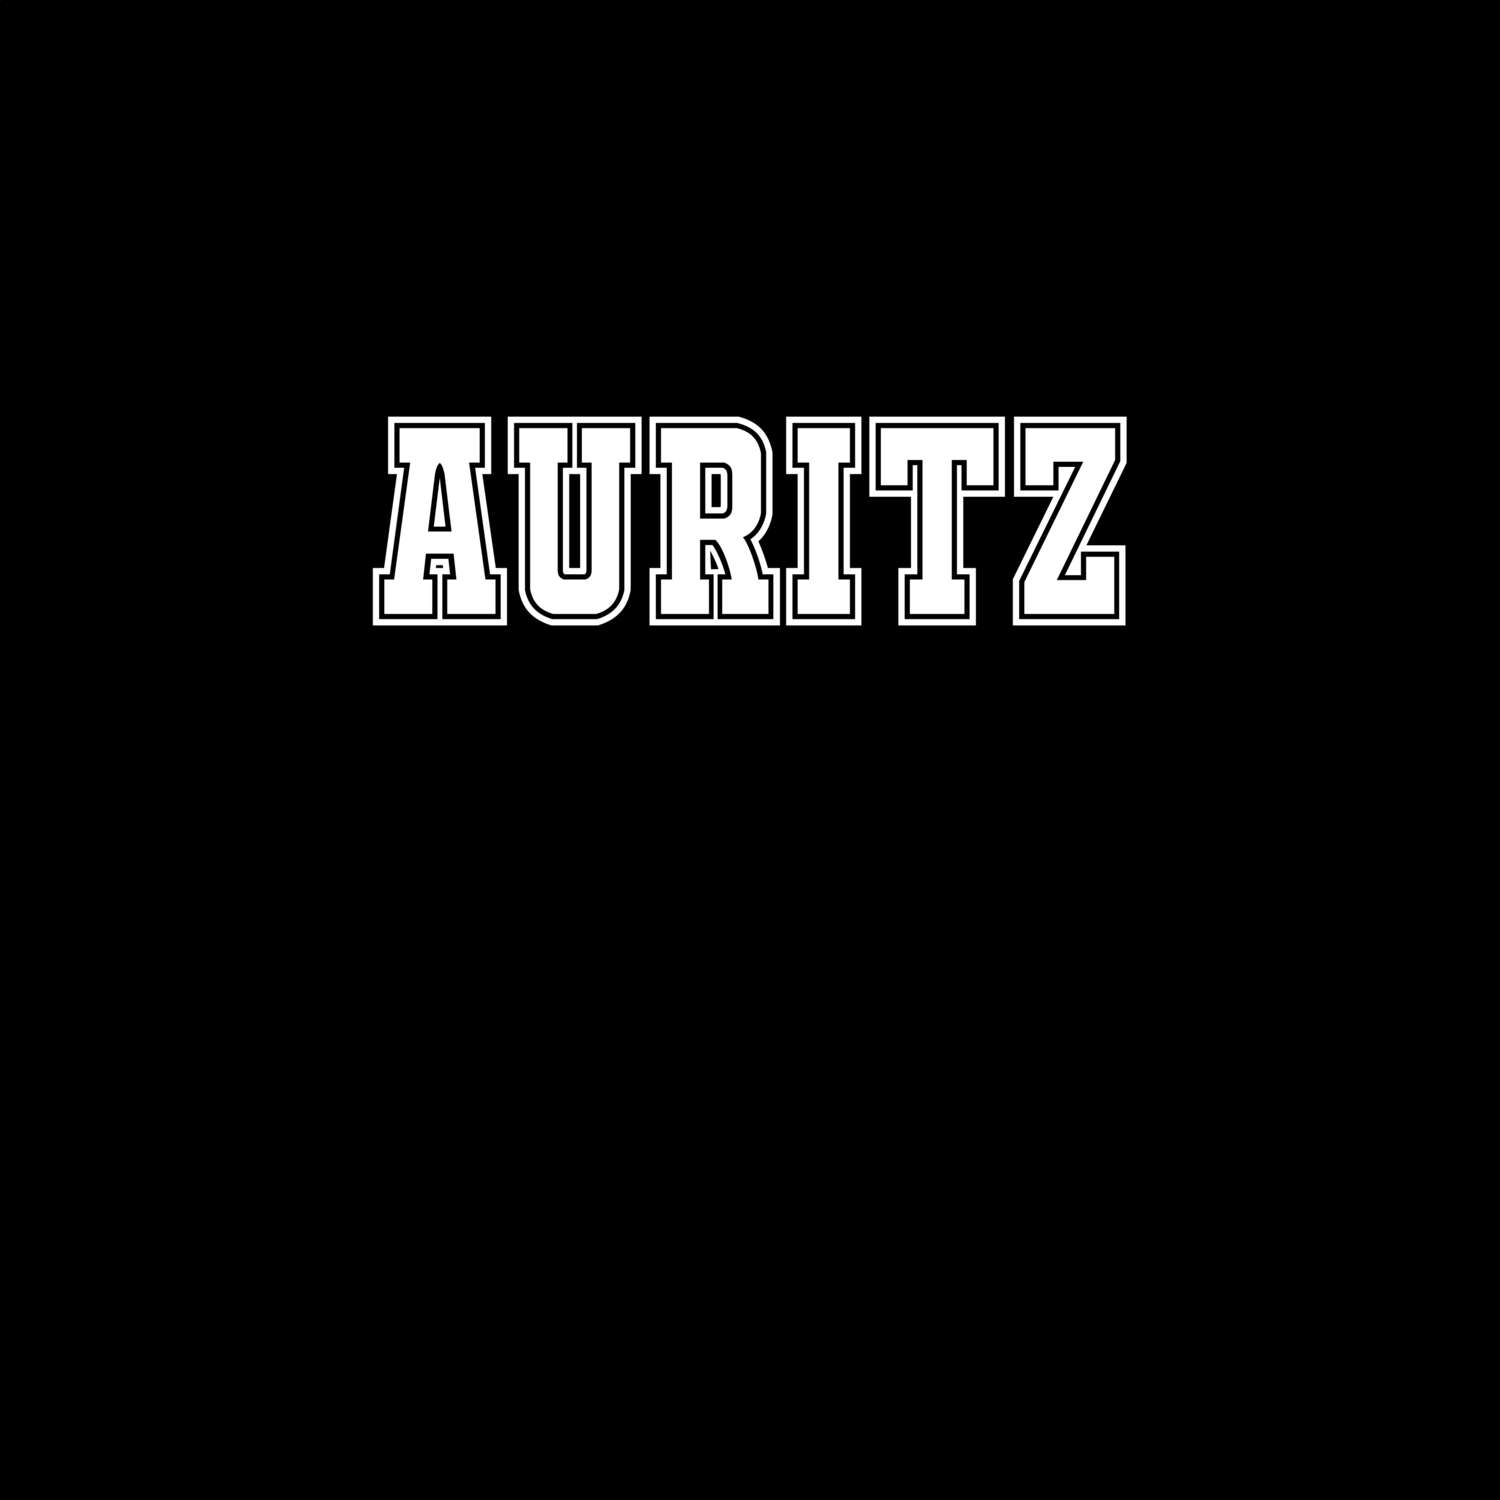 Auritz T-Shirt »Classic«